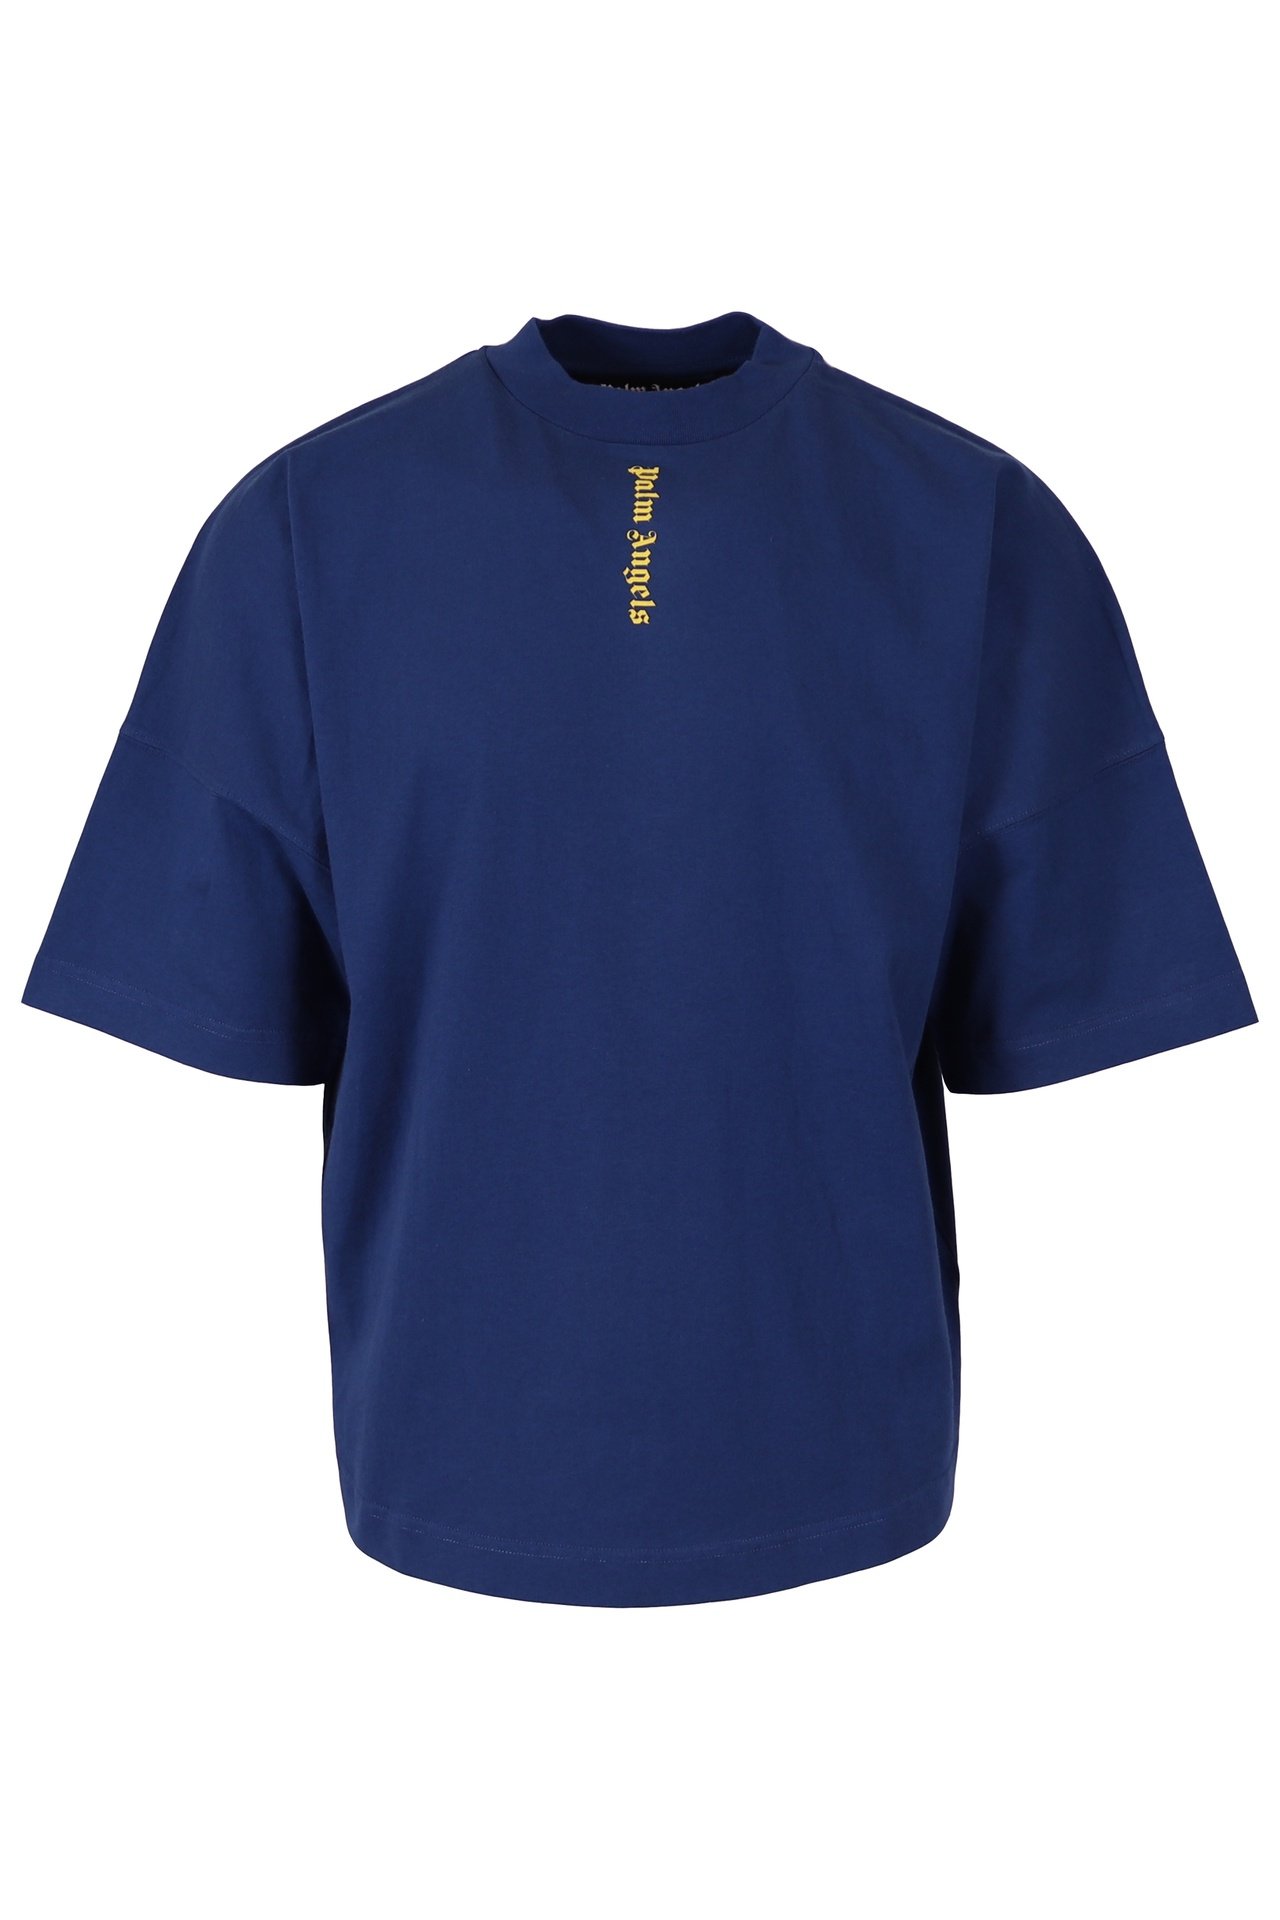 Palm Angels - Camiseta Palm Angels azul con logo amarillo vertical